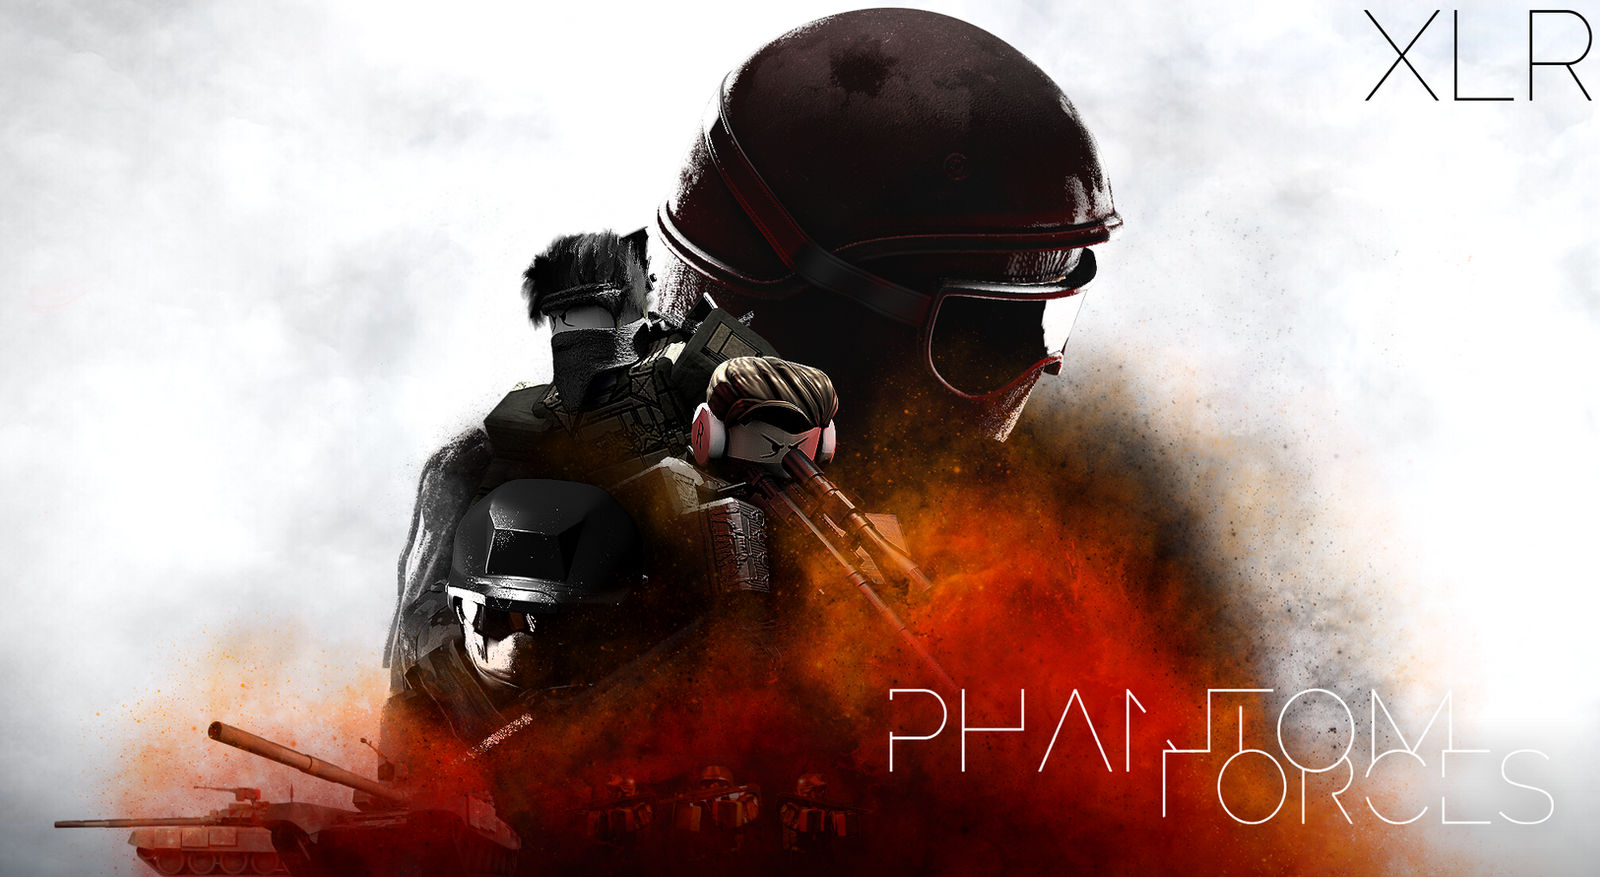 Exelar LLC - Phantom Forces War